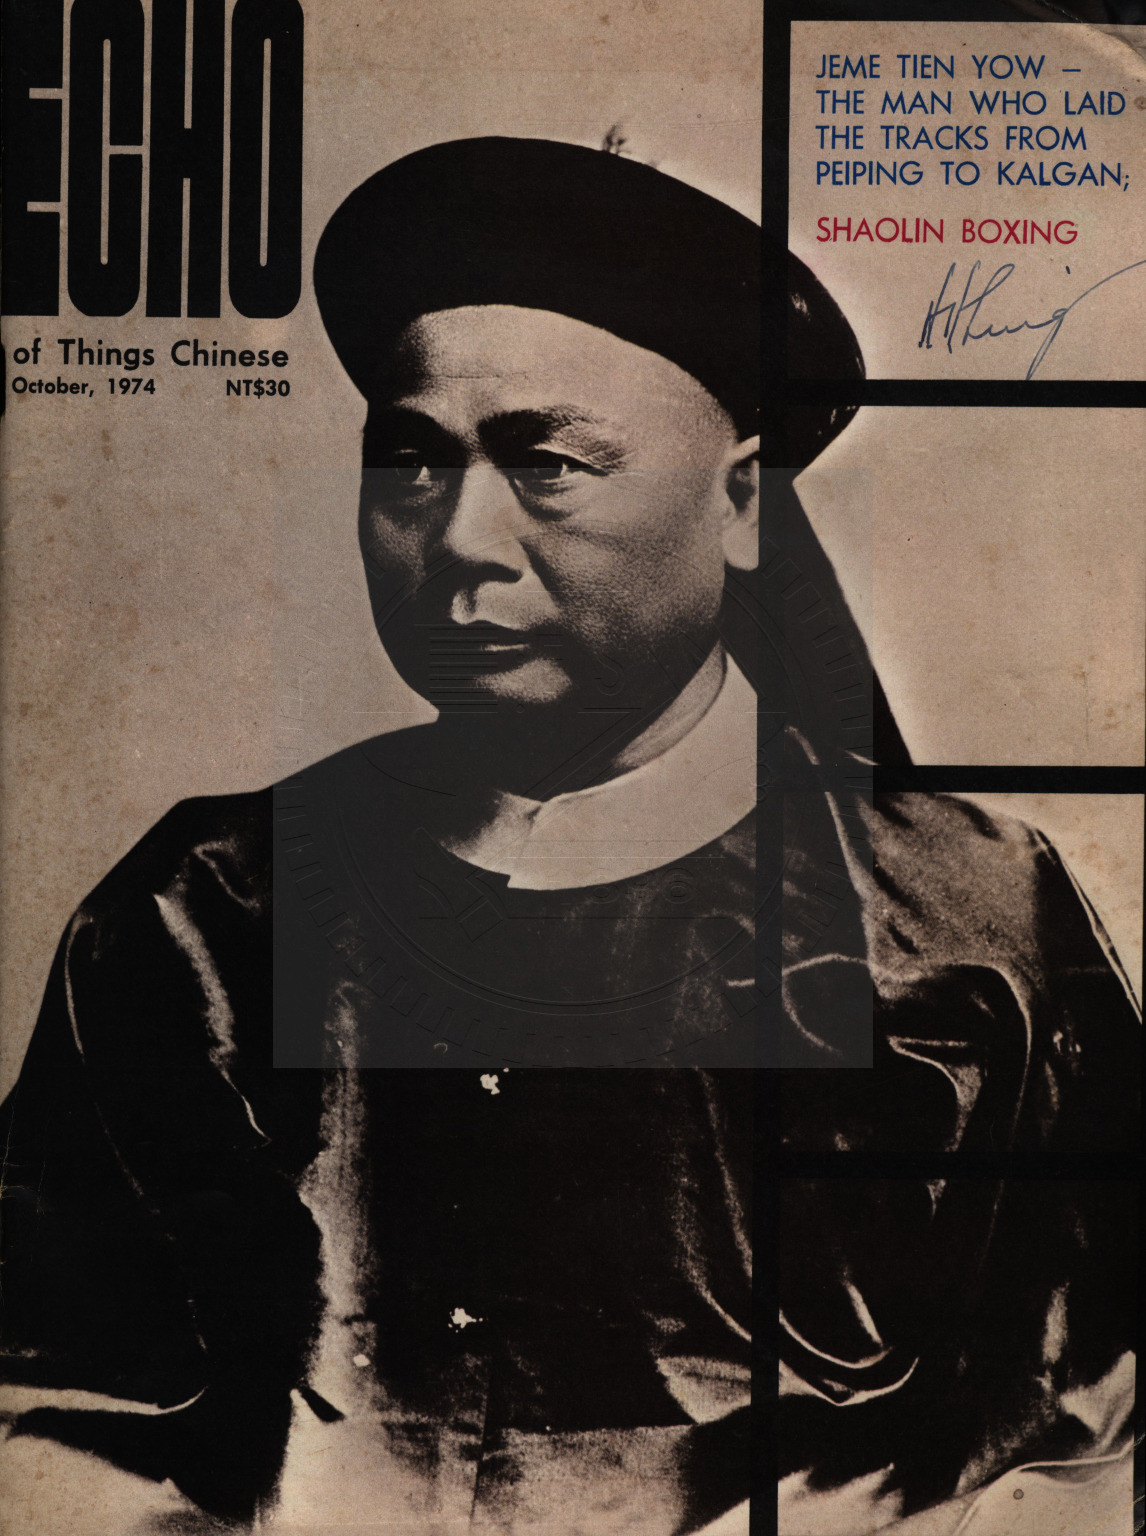 ECHO of Things Chinese (漢聲雜誌, October, 1974)